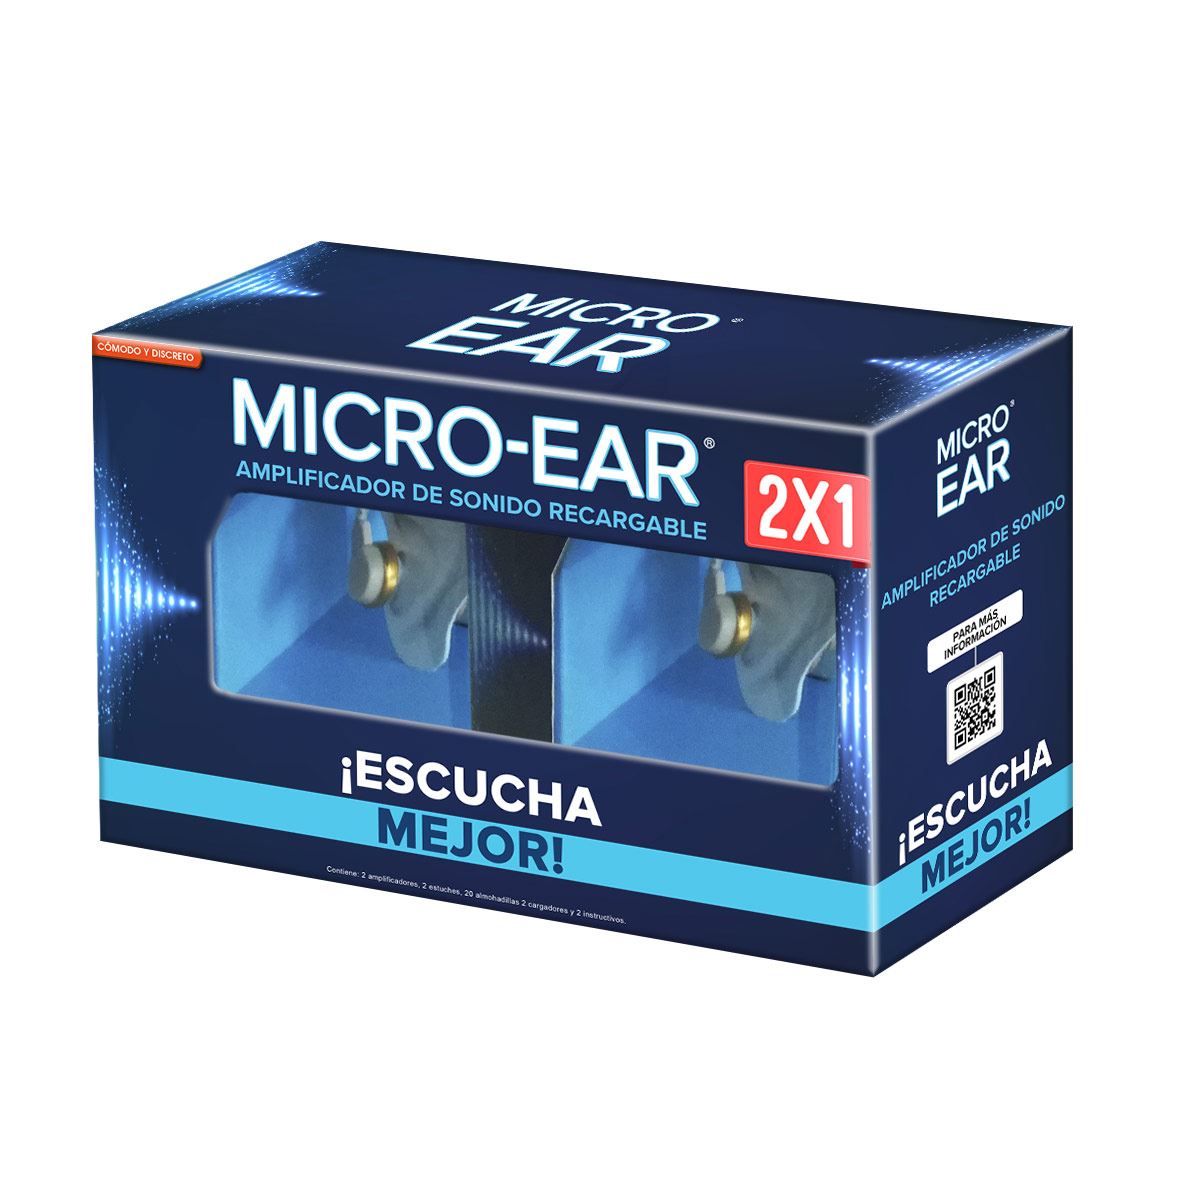 Micro Ear - Amplifica sonido